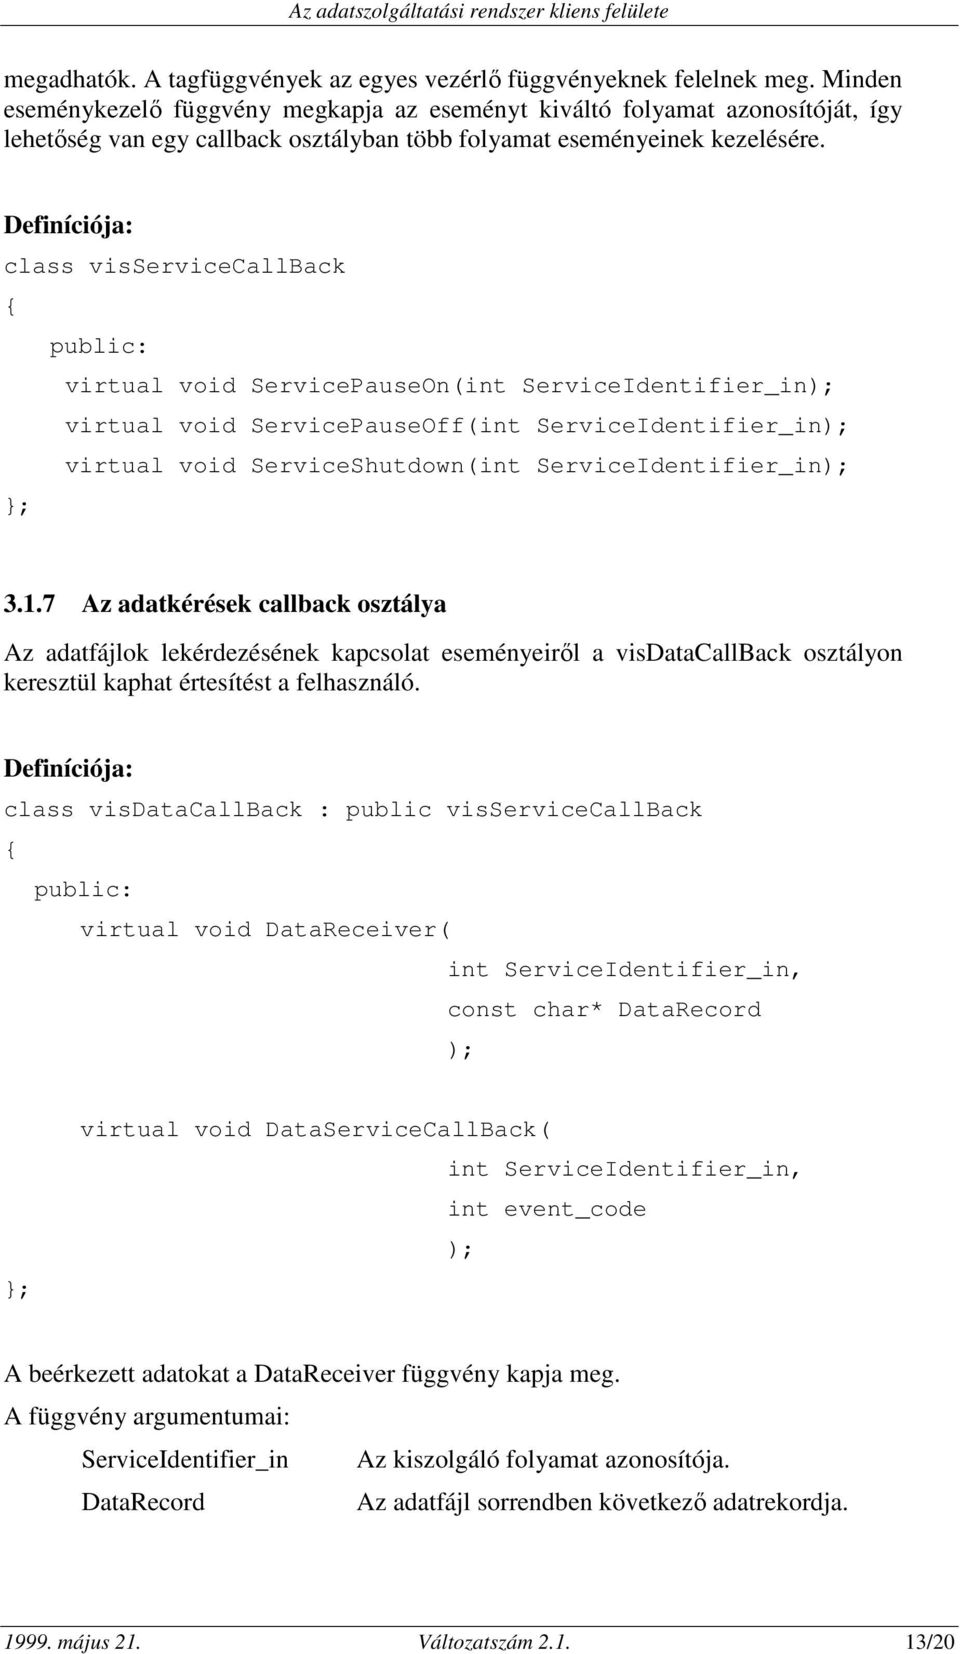 class visservicecallback public: virtual void ServicePauseOn(int ServiceIdentifier_in virtual void ServicePauseOff(int ServiceIdentifier_in virtual void ServiceShutdown(int ServiceIdentifier_in }; 3.